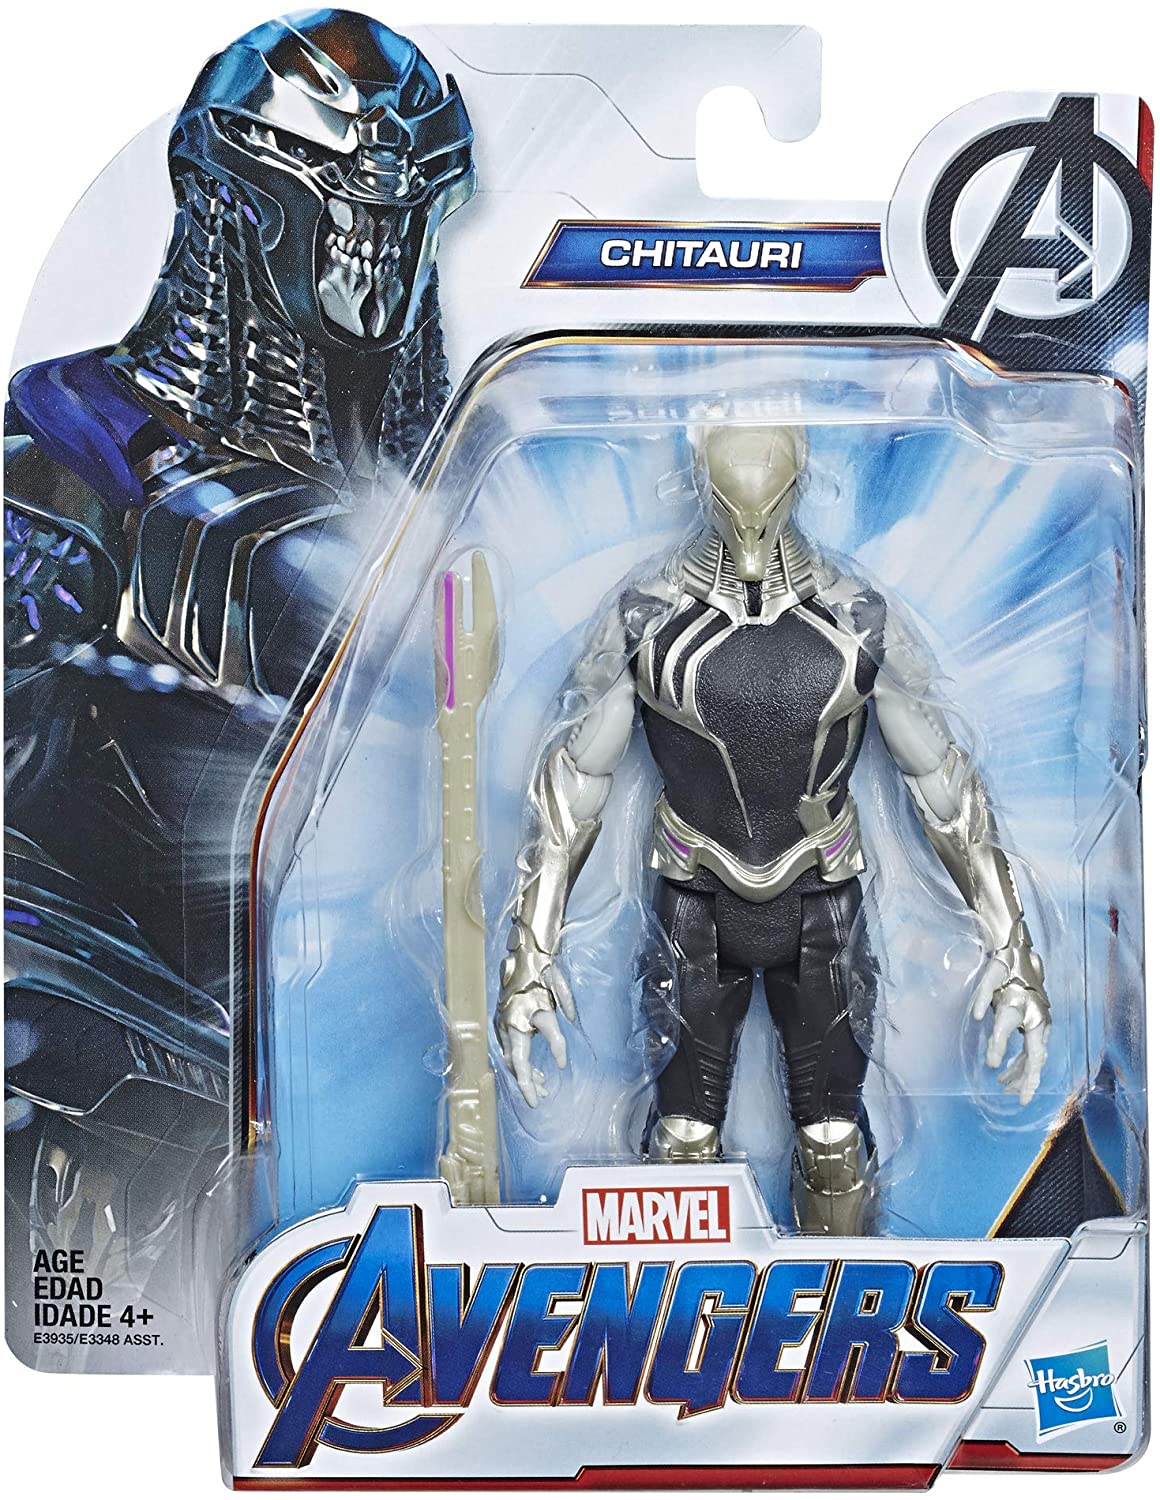 Marvel Avengers 6 Inch Action Figure | Chitauri